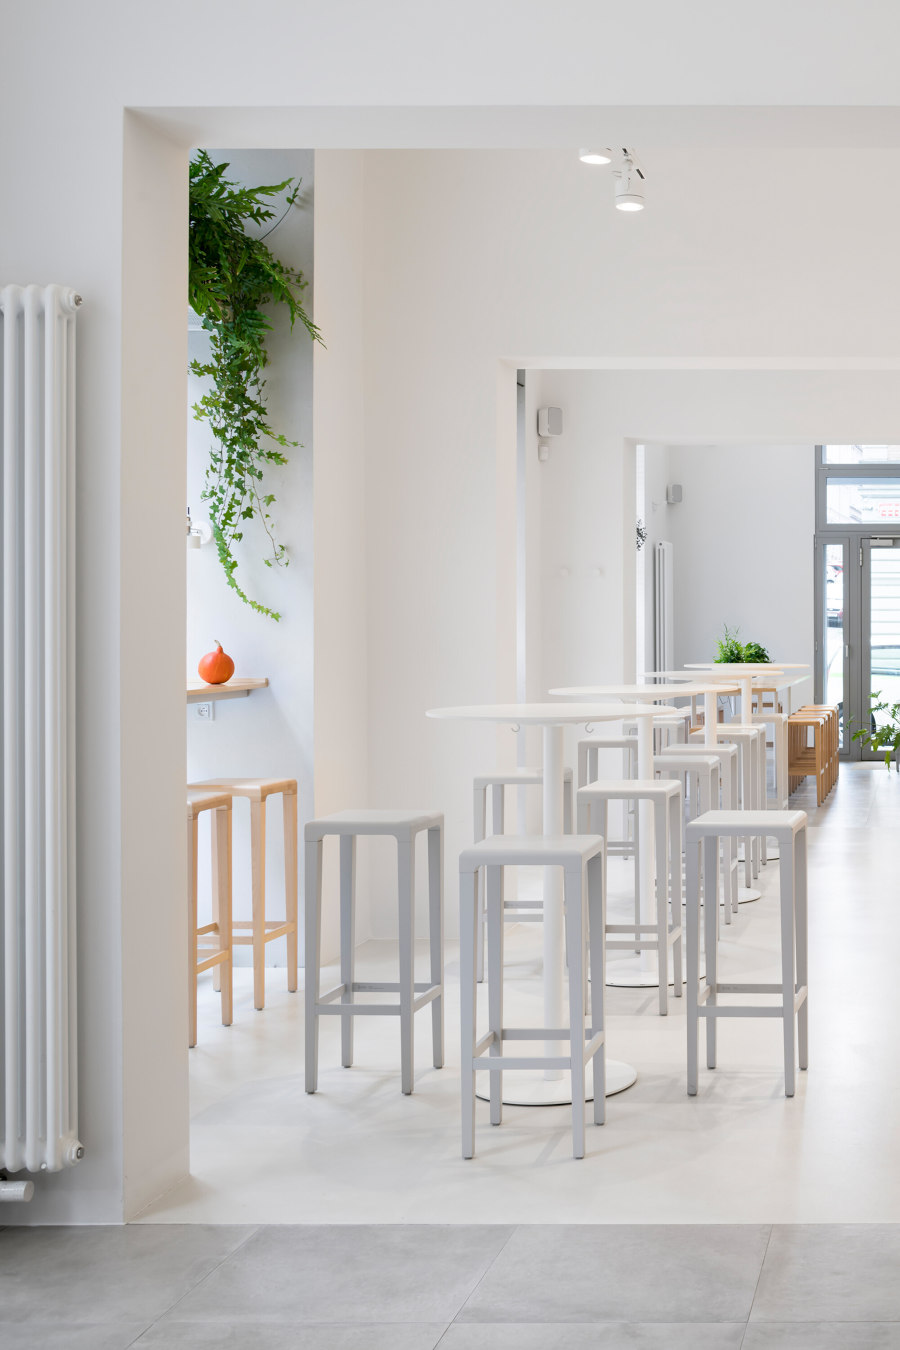 Loving Bistro Letná by Esté architekti | Café interiors